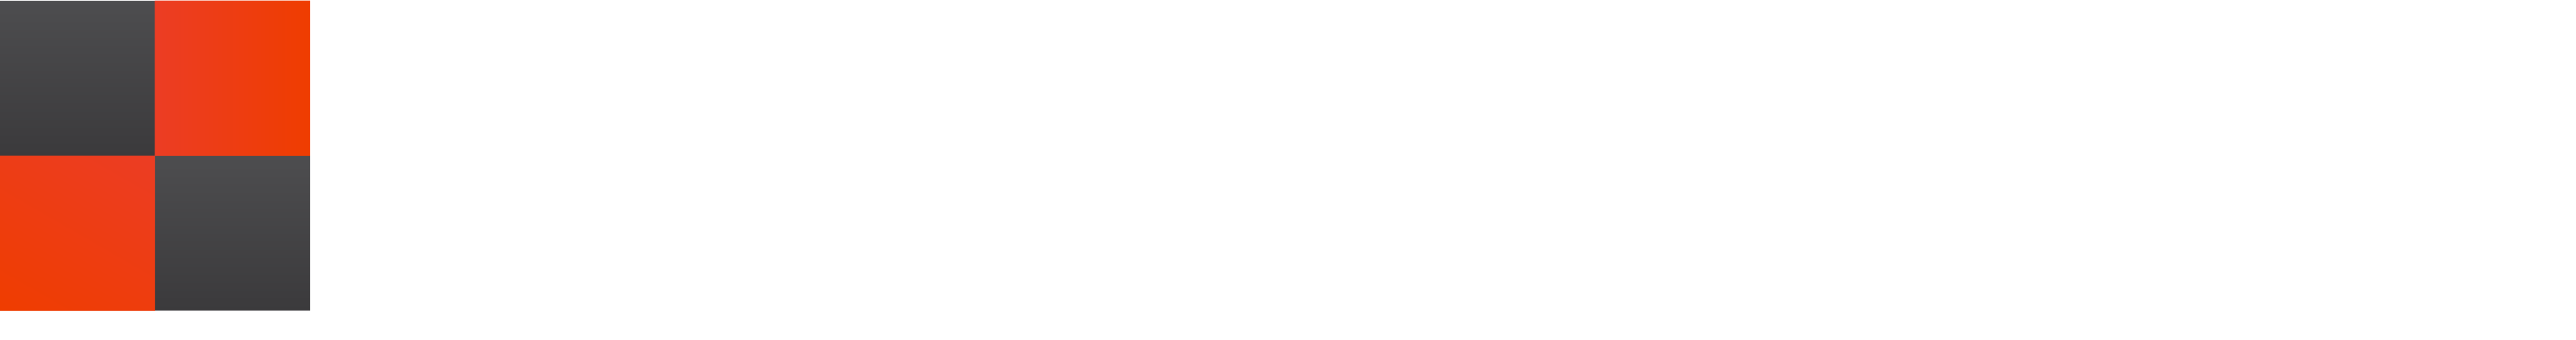 The Web Square Logo